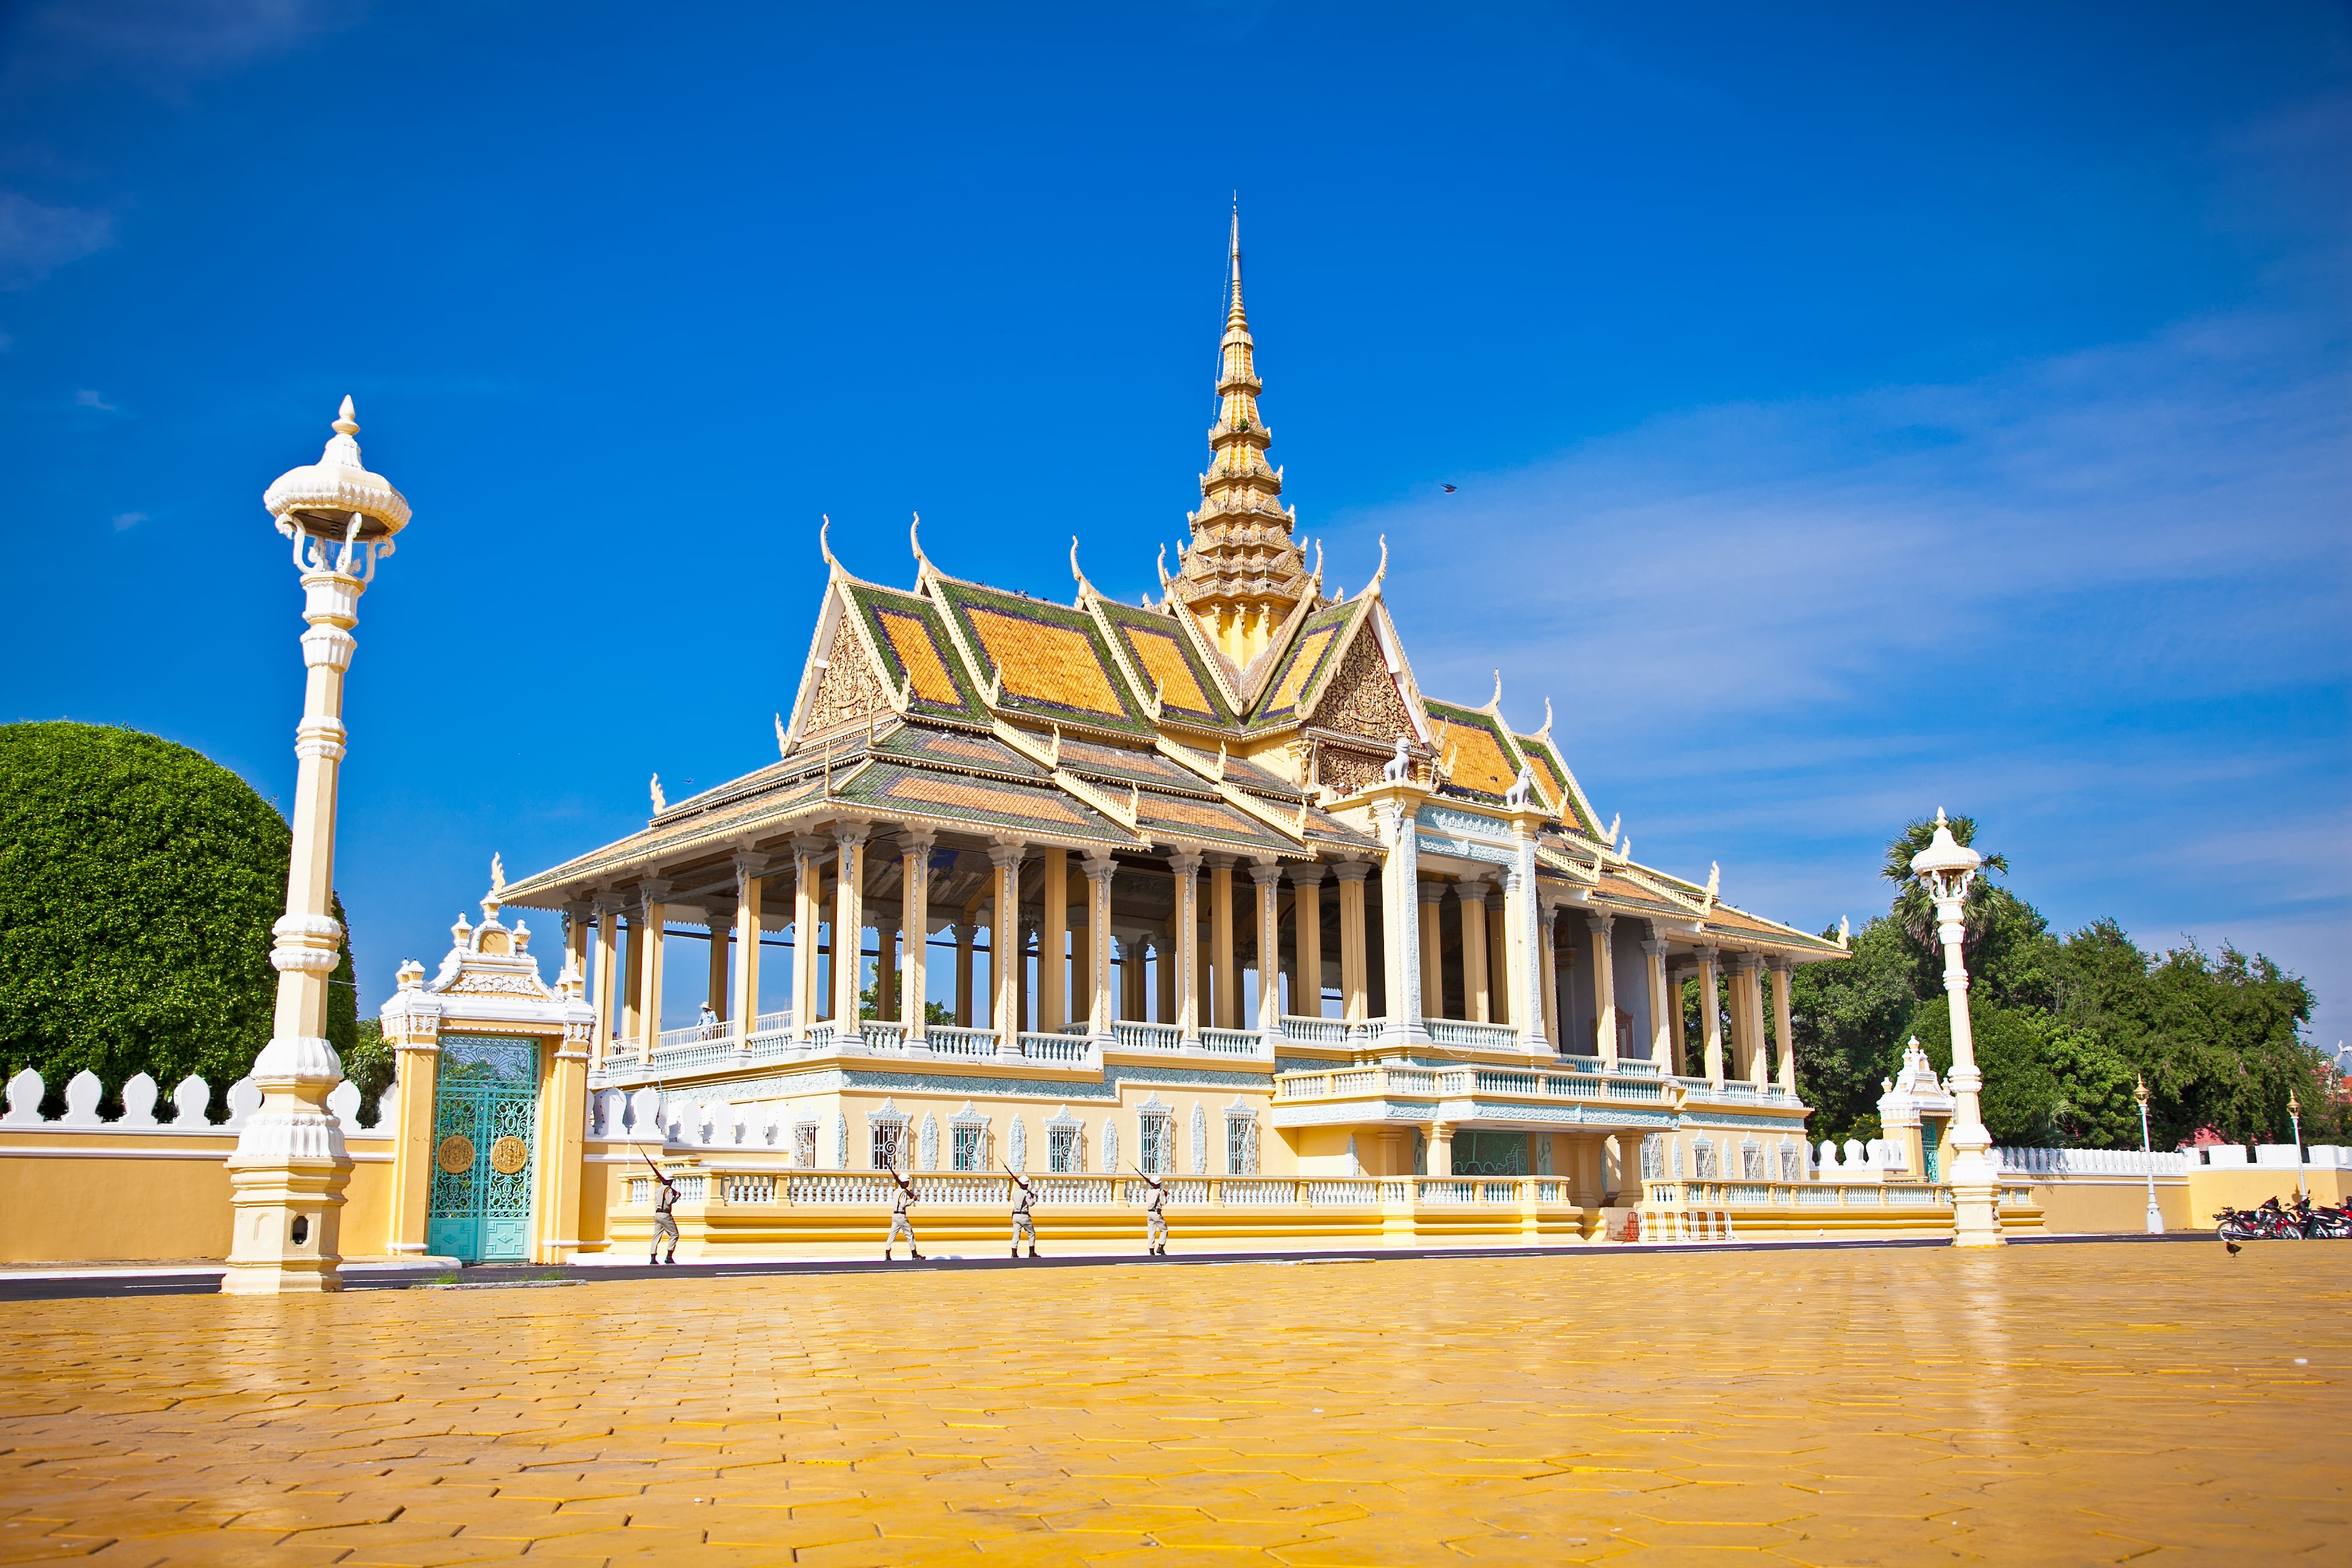 https://f7c7358c.rocketcdn.me/wp-content/uploads/2019/10/Cambodia-Royal-Palace-Phnom-Penh.jpg